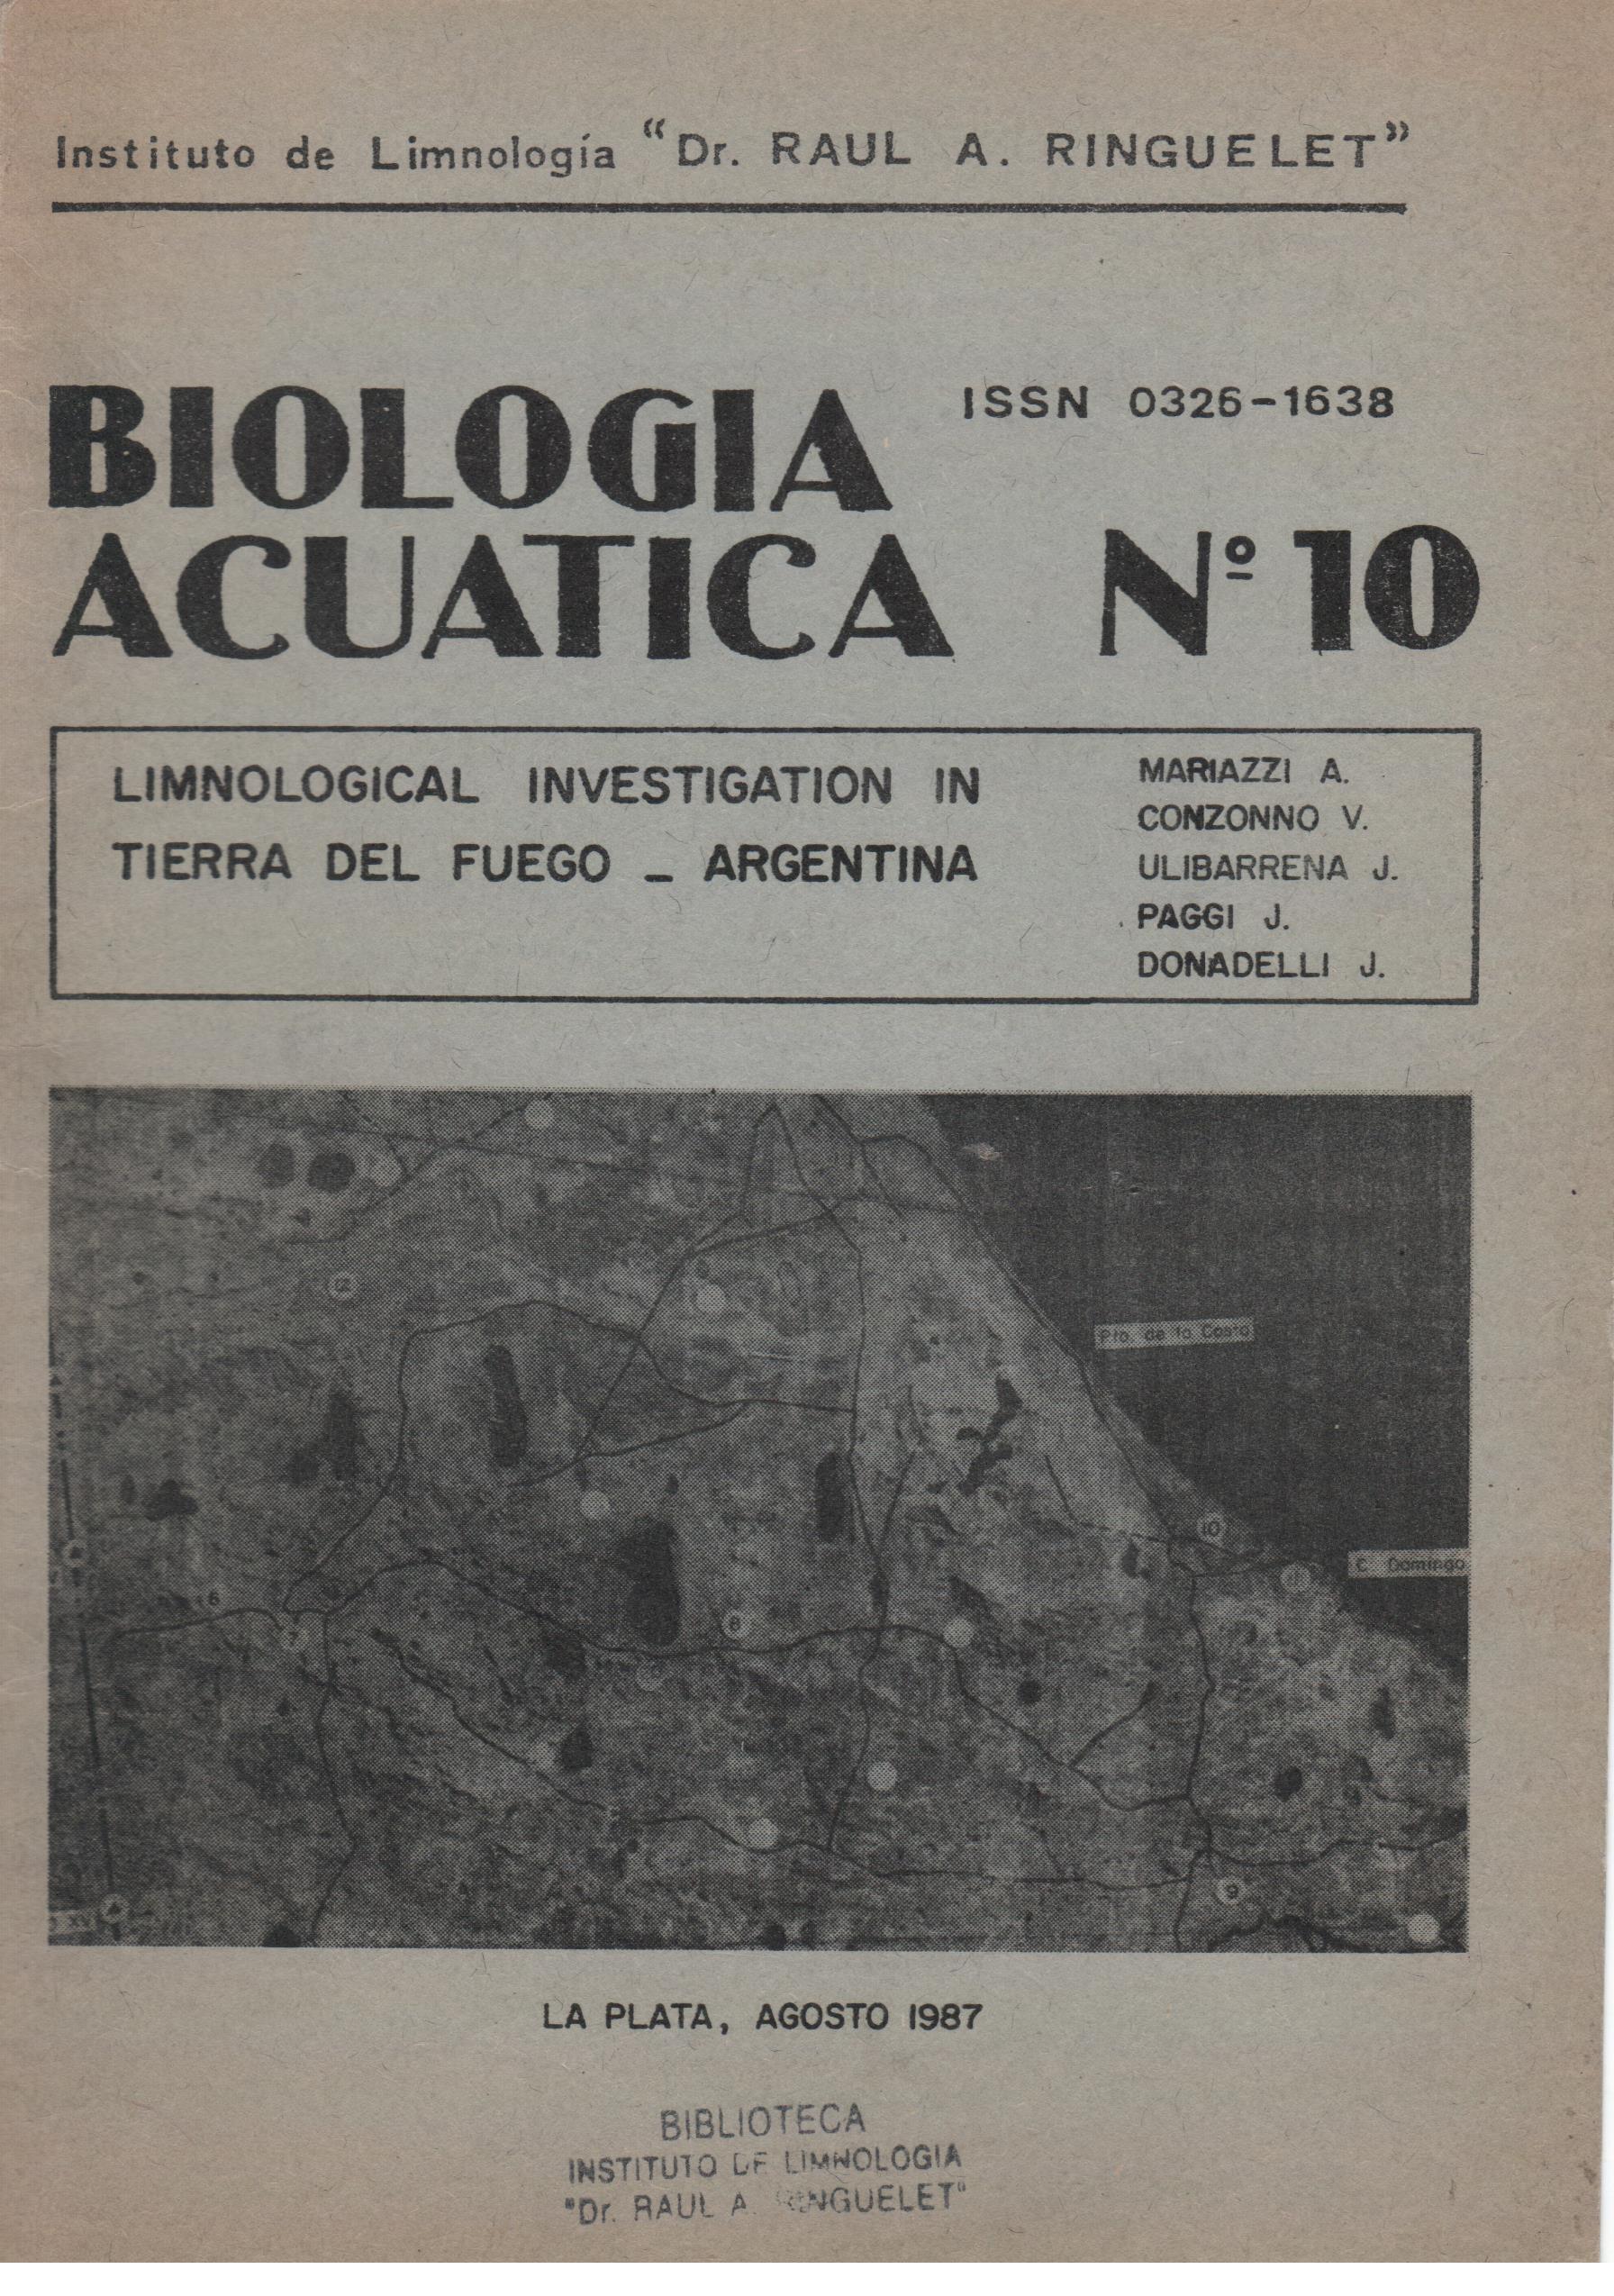 					Visualizar n. 10 (1987): Limnological investigation in Tierra del Fuego, Argentina
				